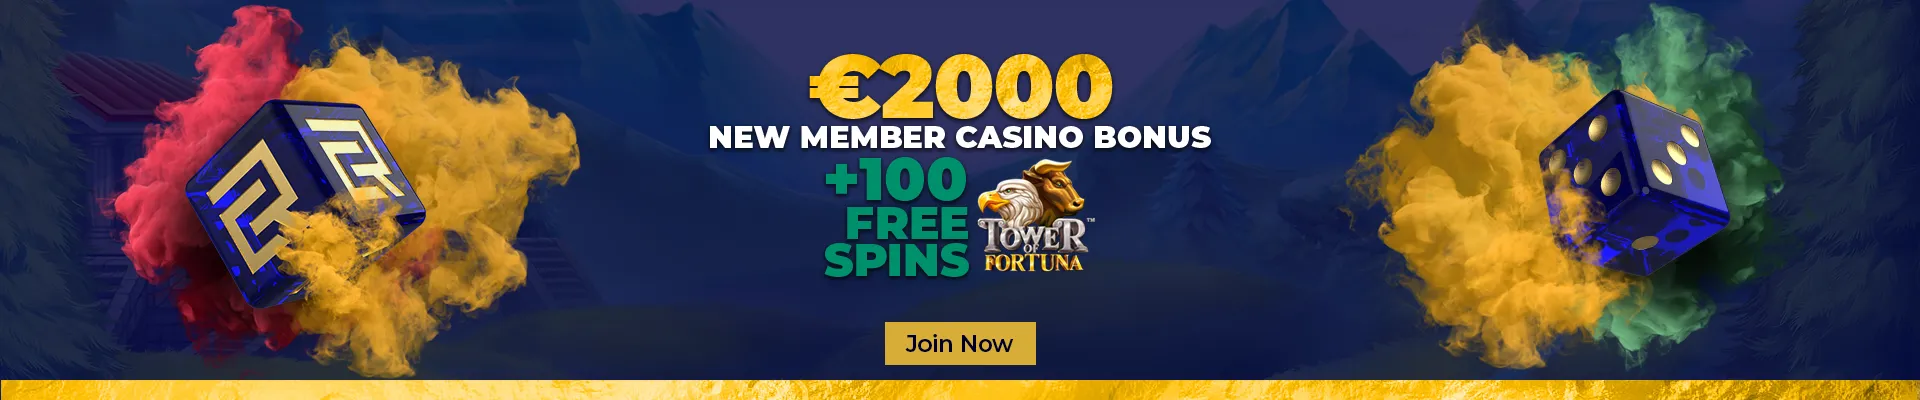 club-riches-banner-1920x400-en-new-member-casino-bonus-EUR